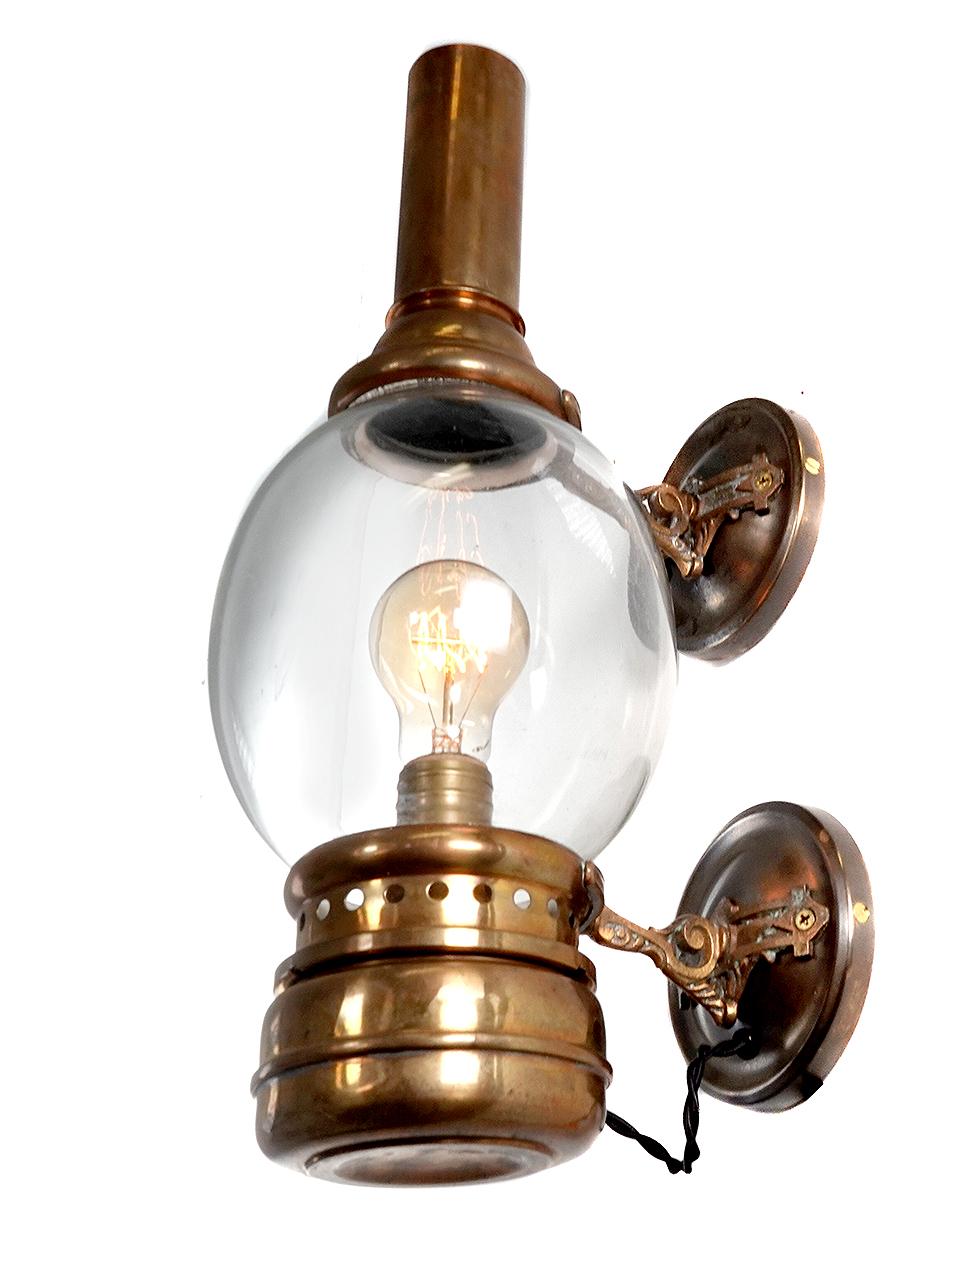 American Adams and Westlake Egg Globe Railcar Side Lamp